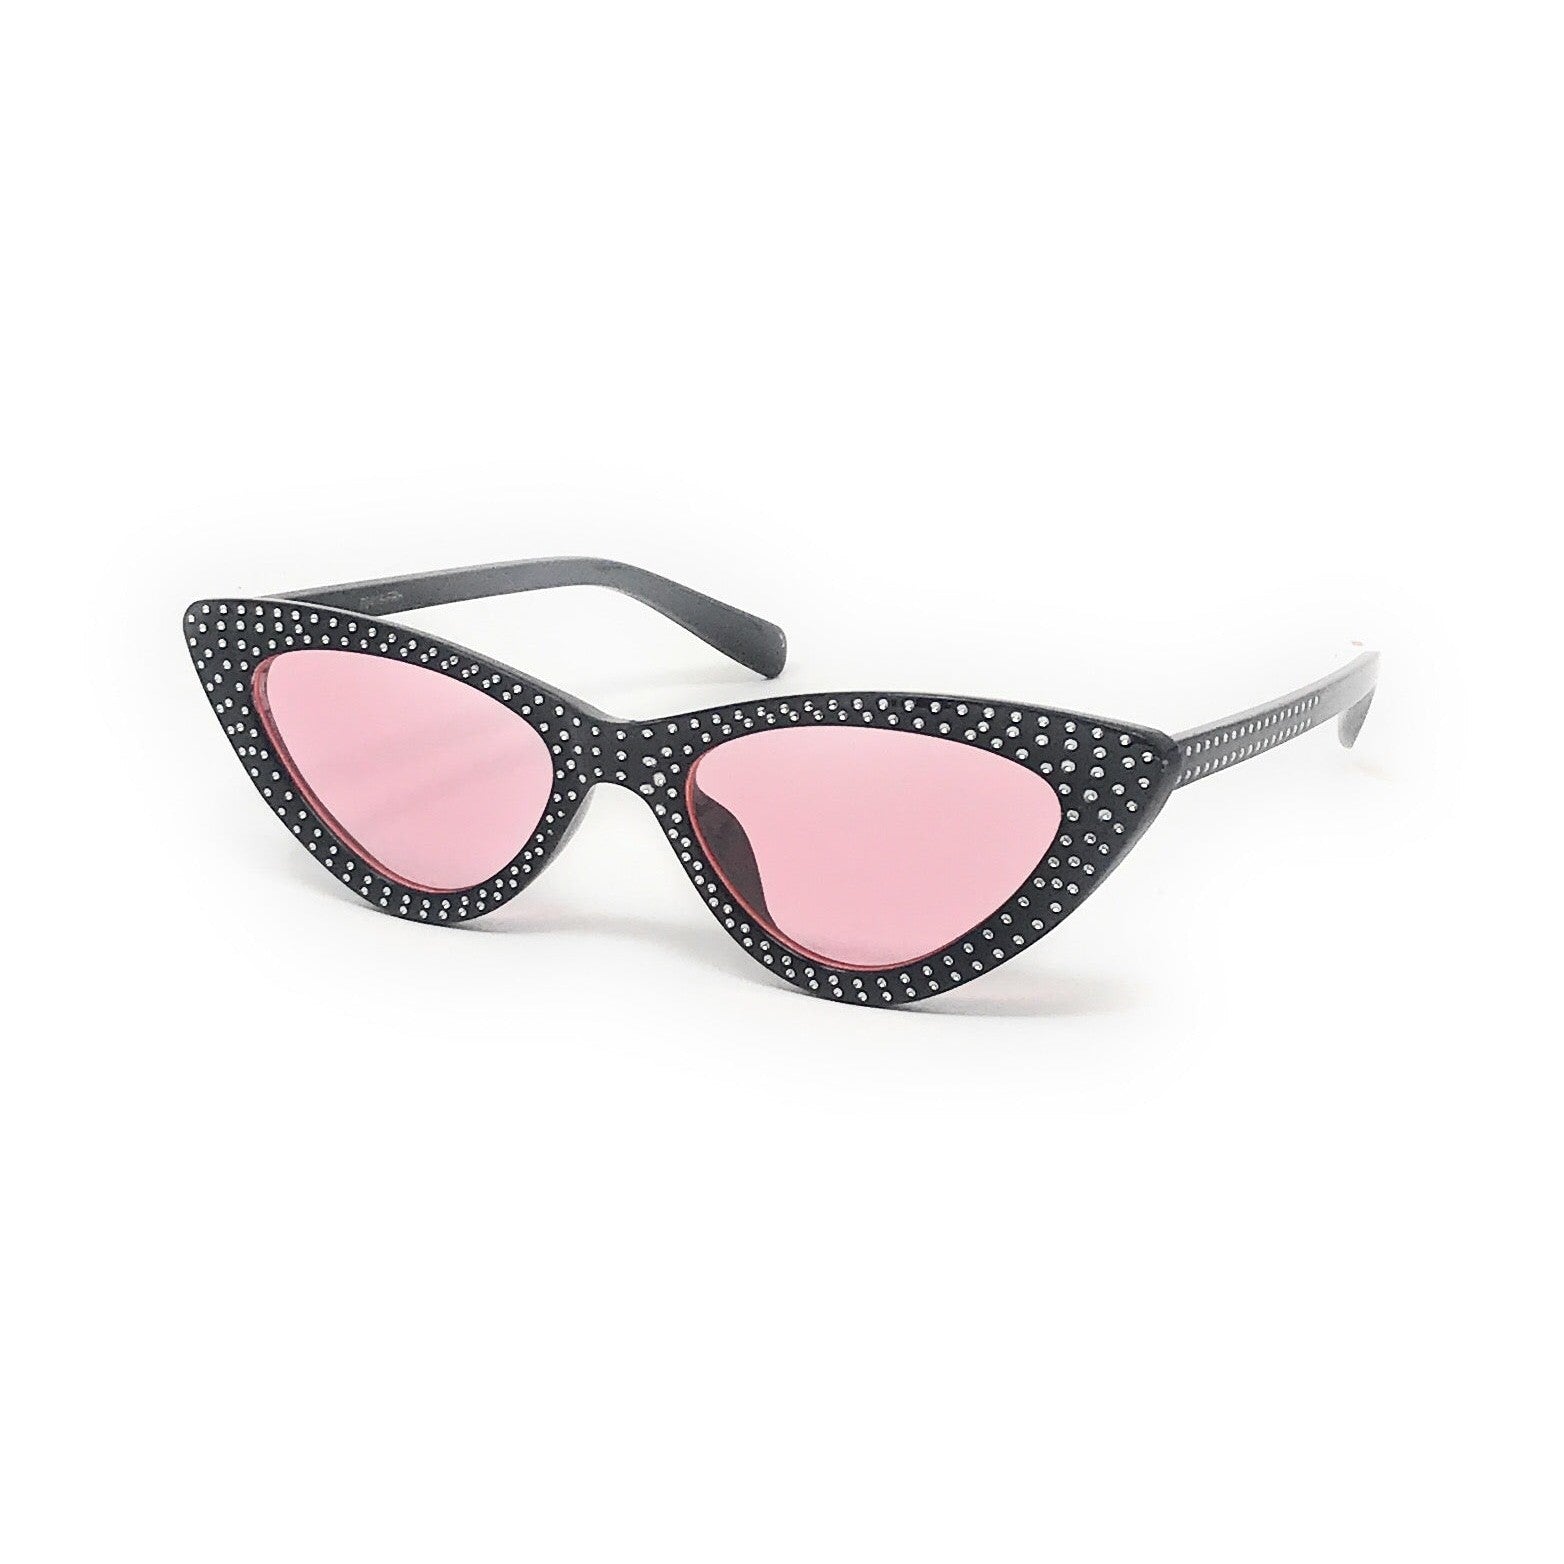 Black and White Polka Dot Pink Lense 1950s Vintage Sunglasses